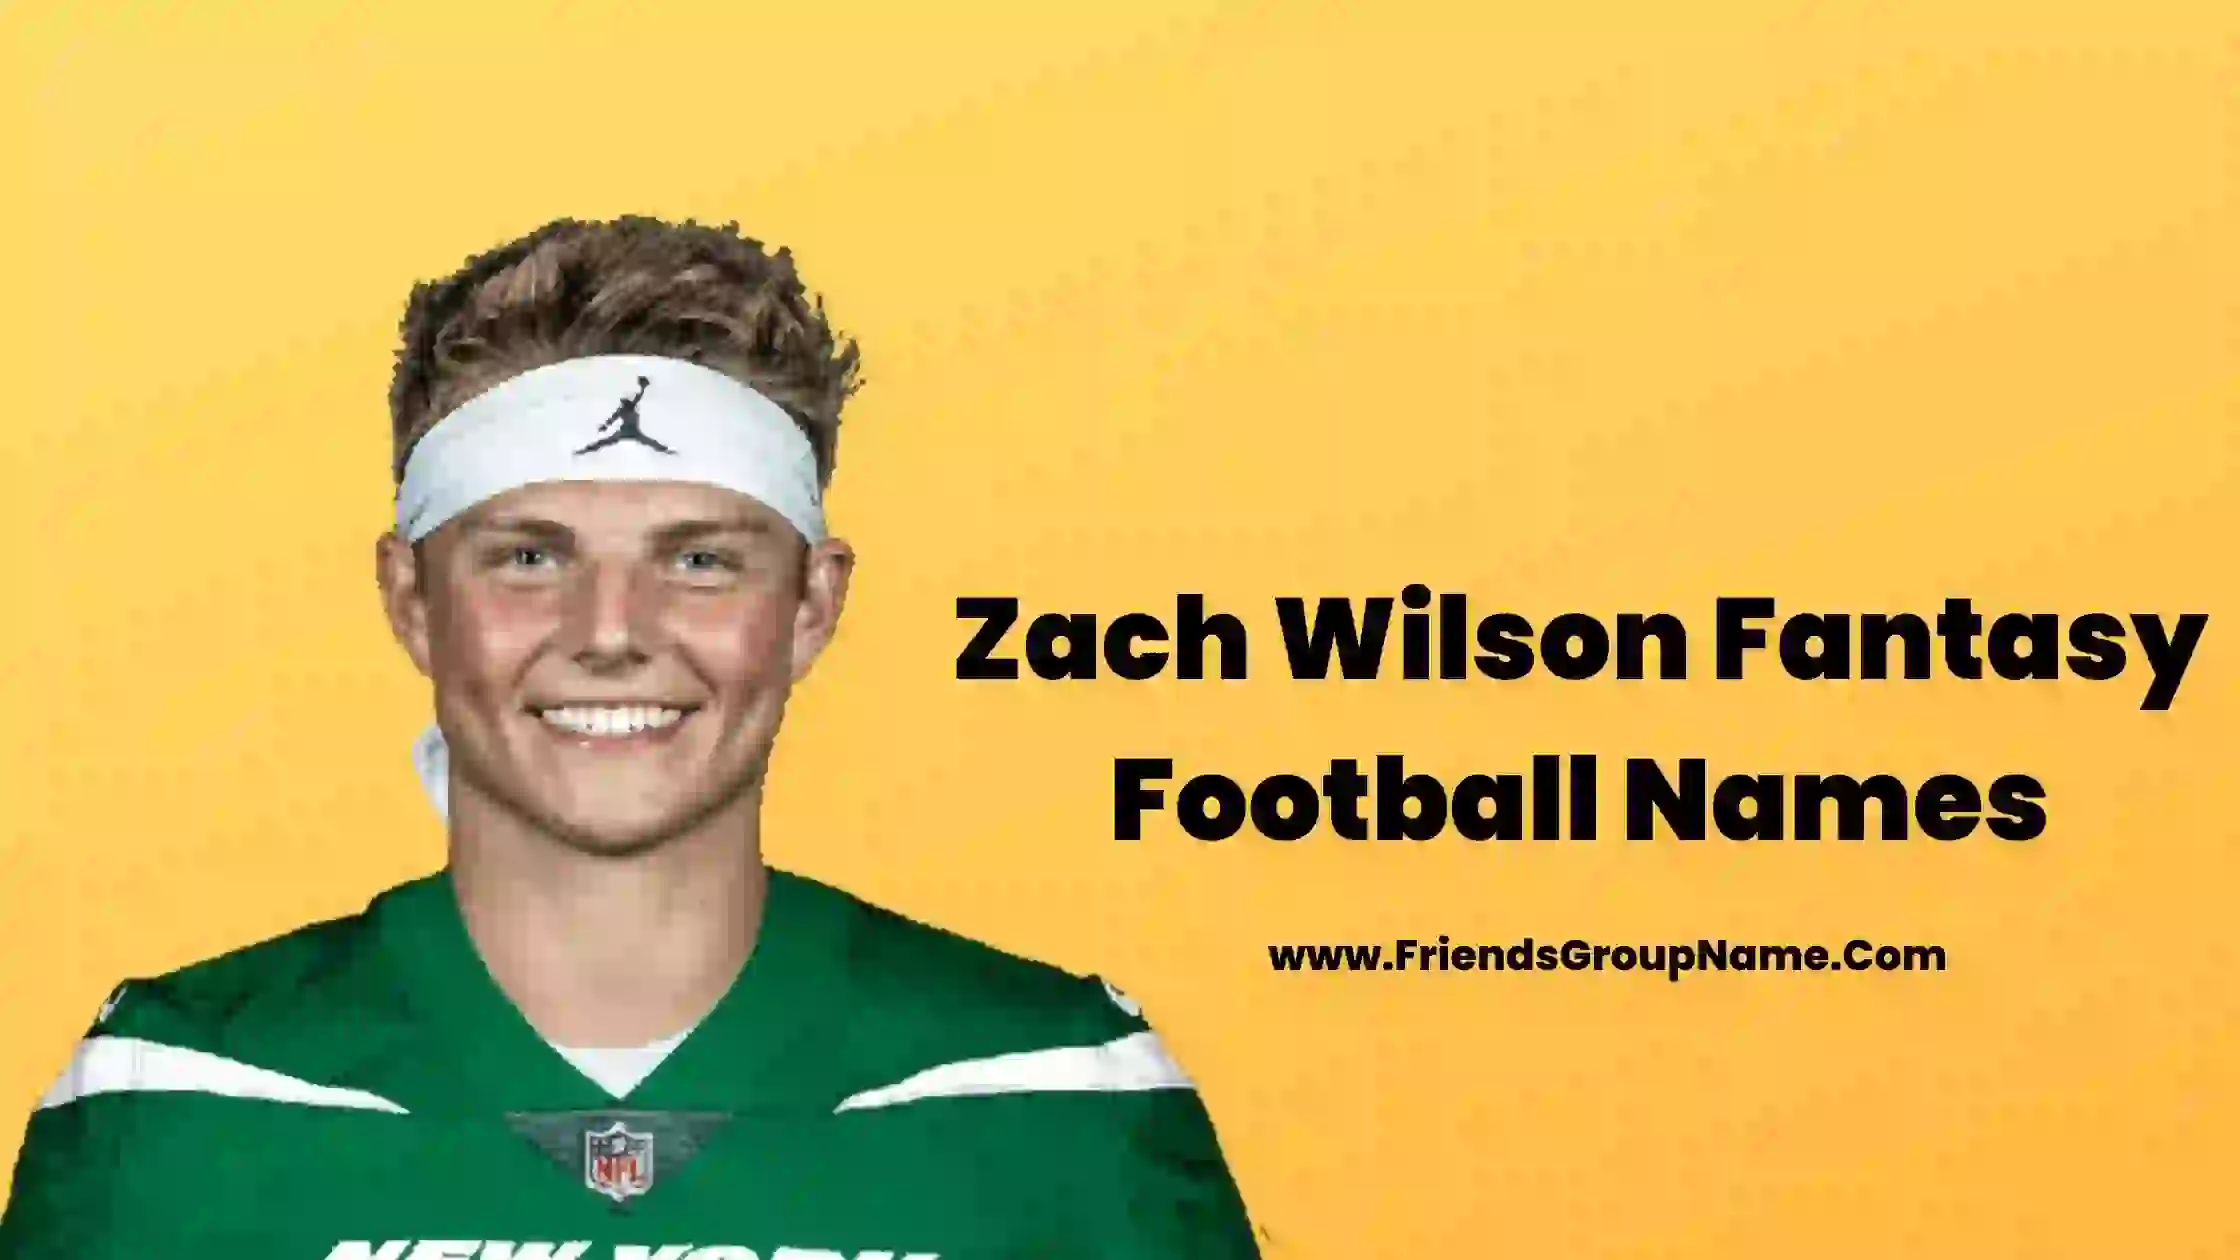 Zach Wilson Fantasy Football Names